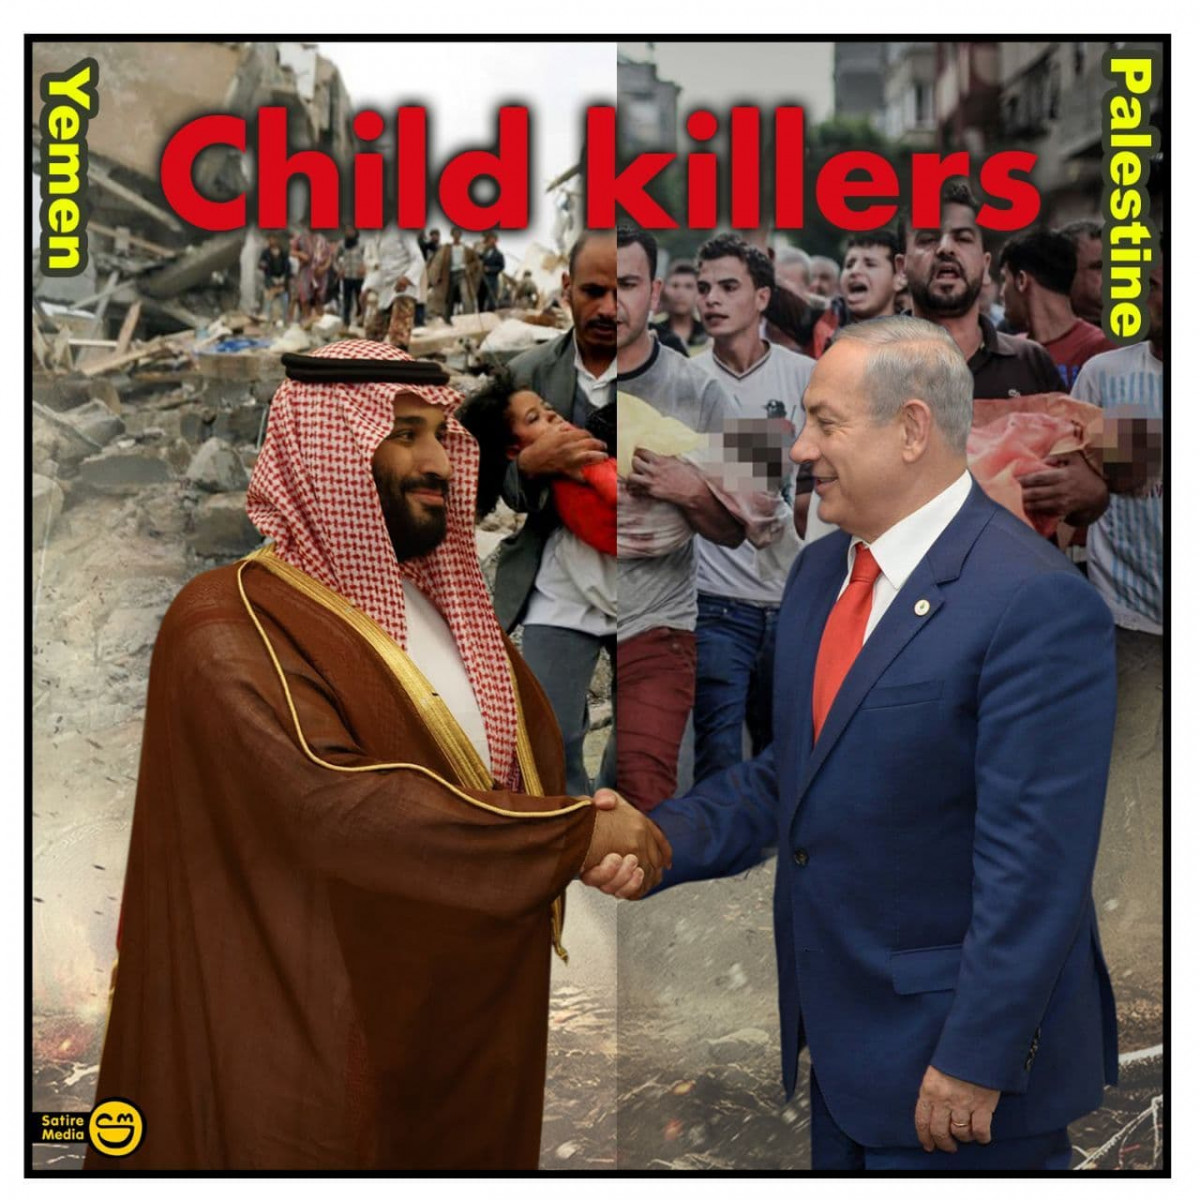 Child killers